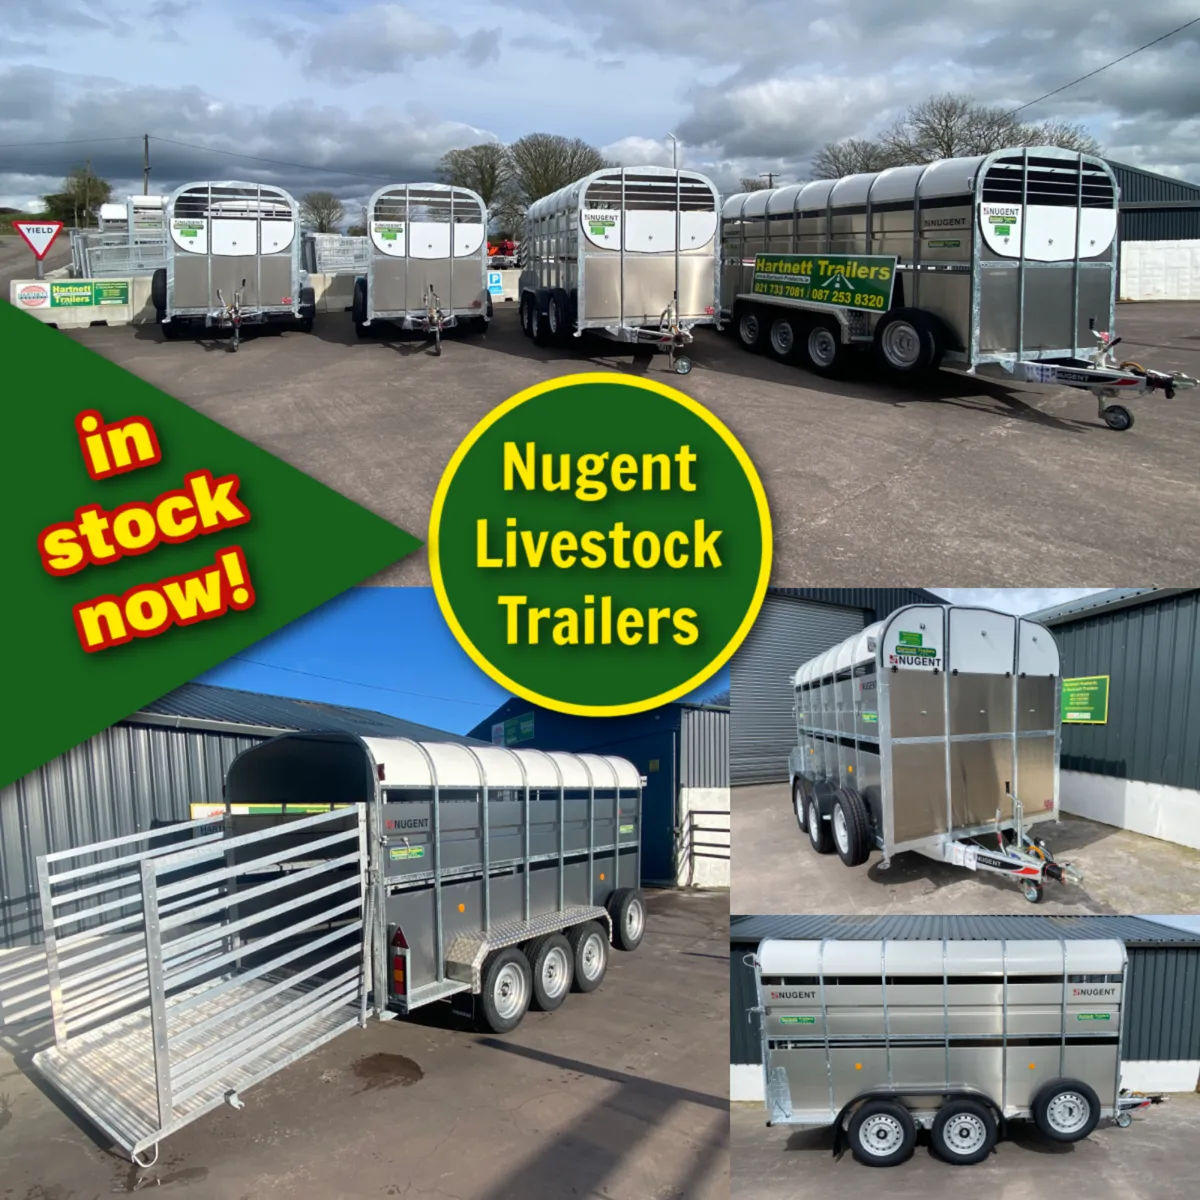 NEW Nugent Livestock Trailers - Image 1